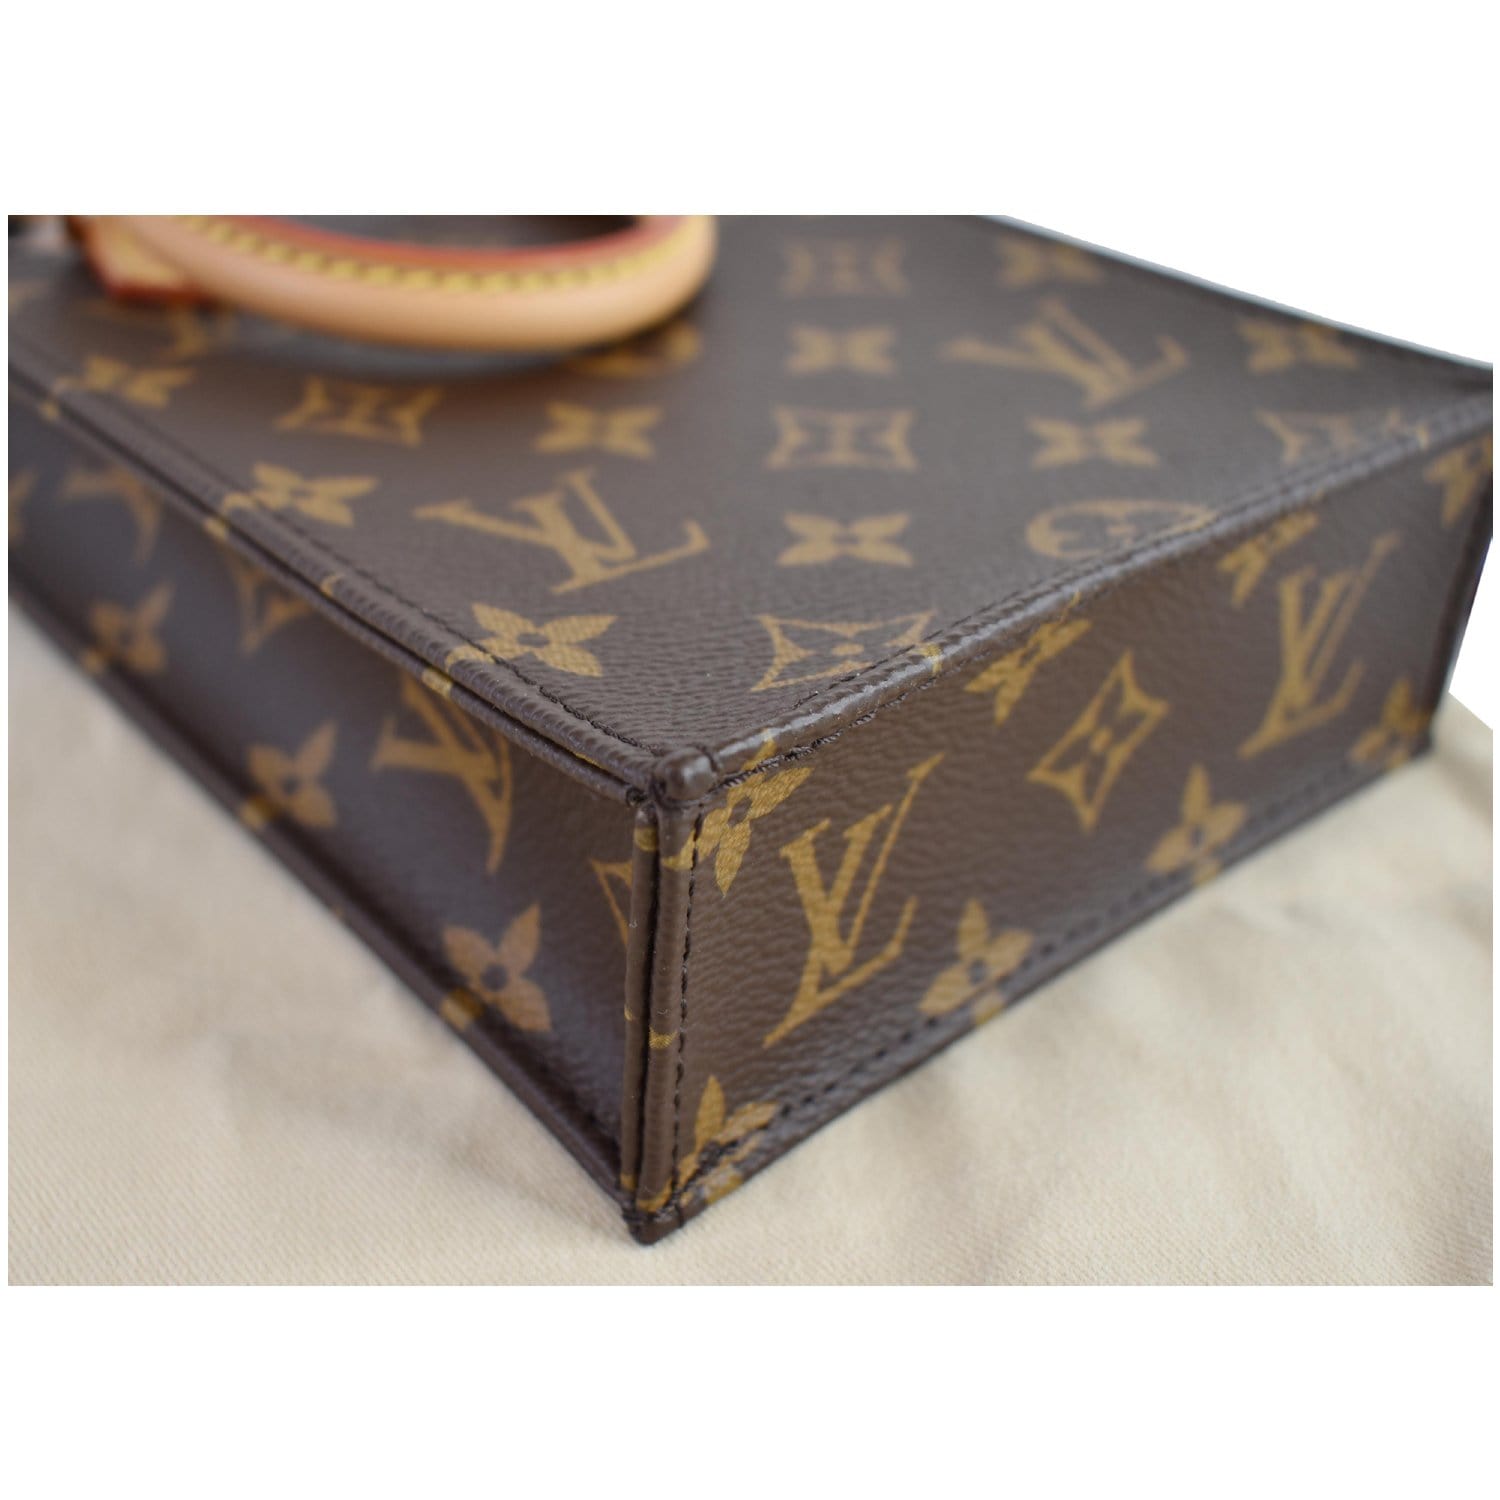 Louis Vuitton Petit Sac Plat M69442 store túi da LV nữ đẹp nhất